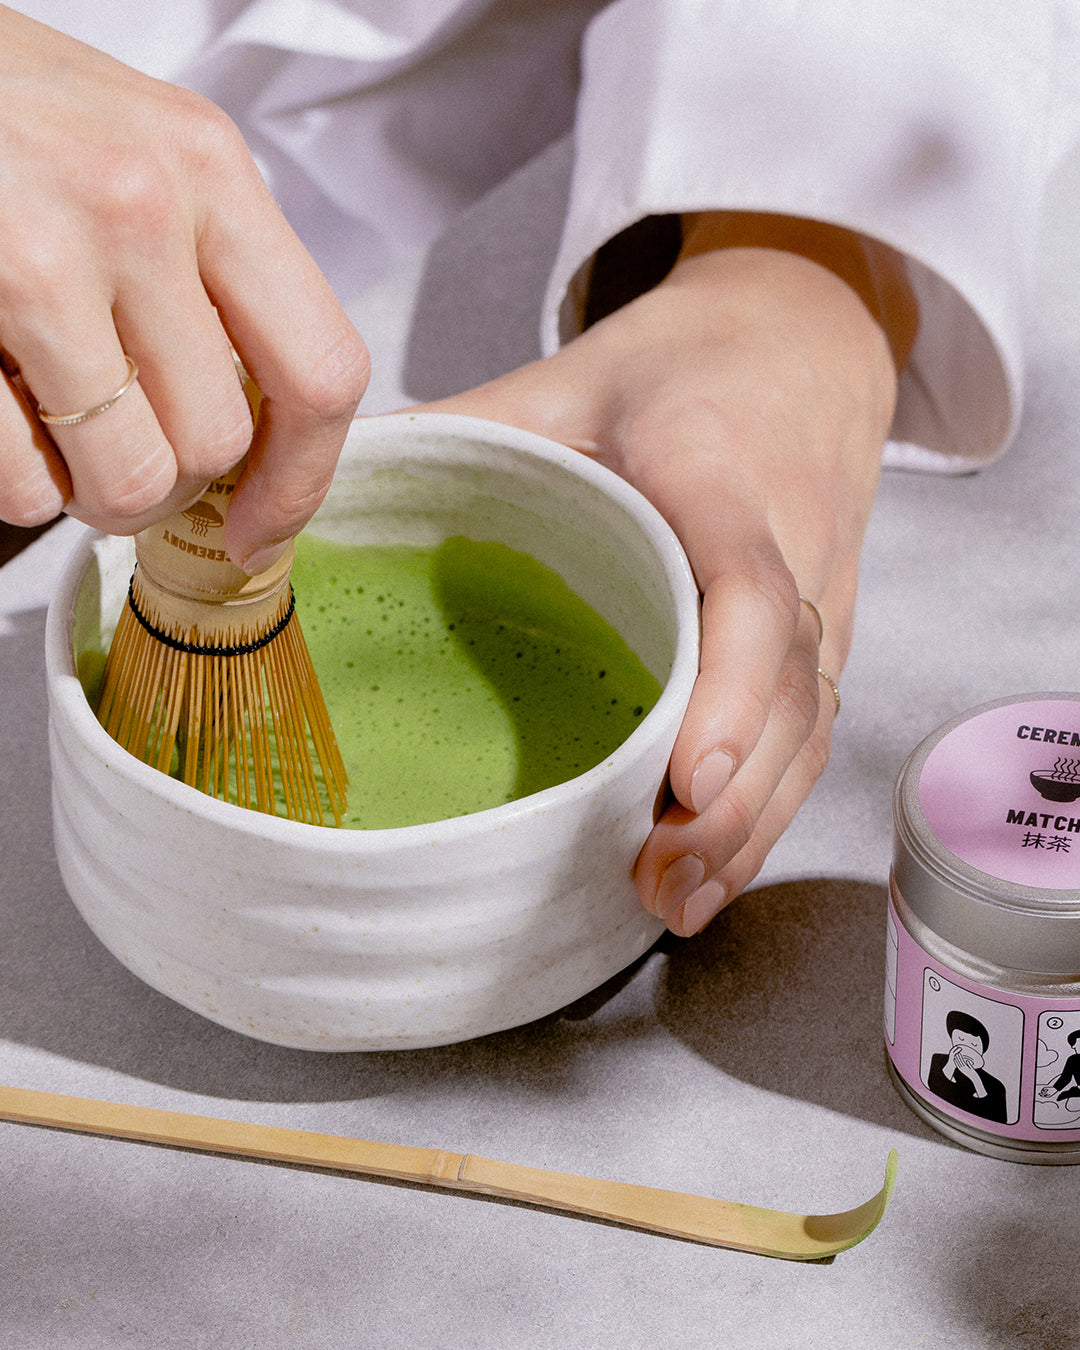 Female barista hands preparing matcha tea on a bowl, mixing it